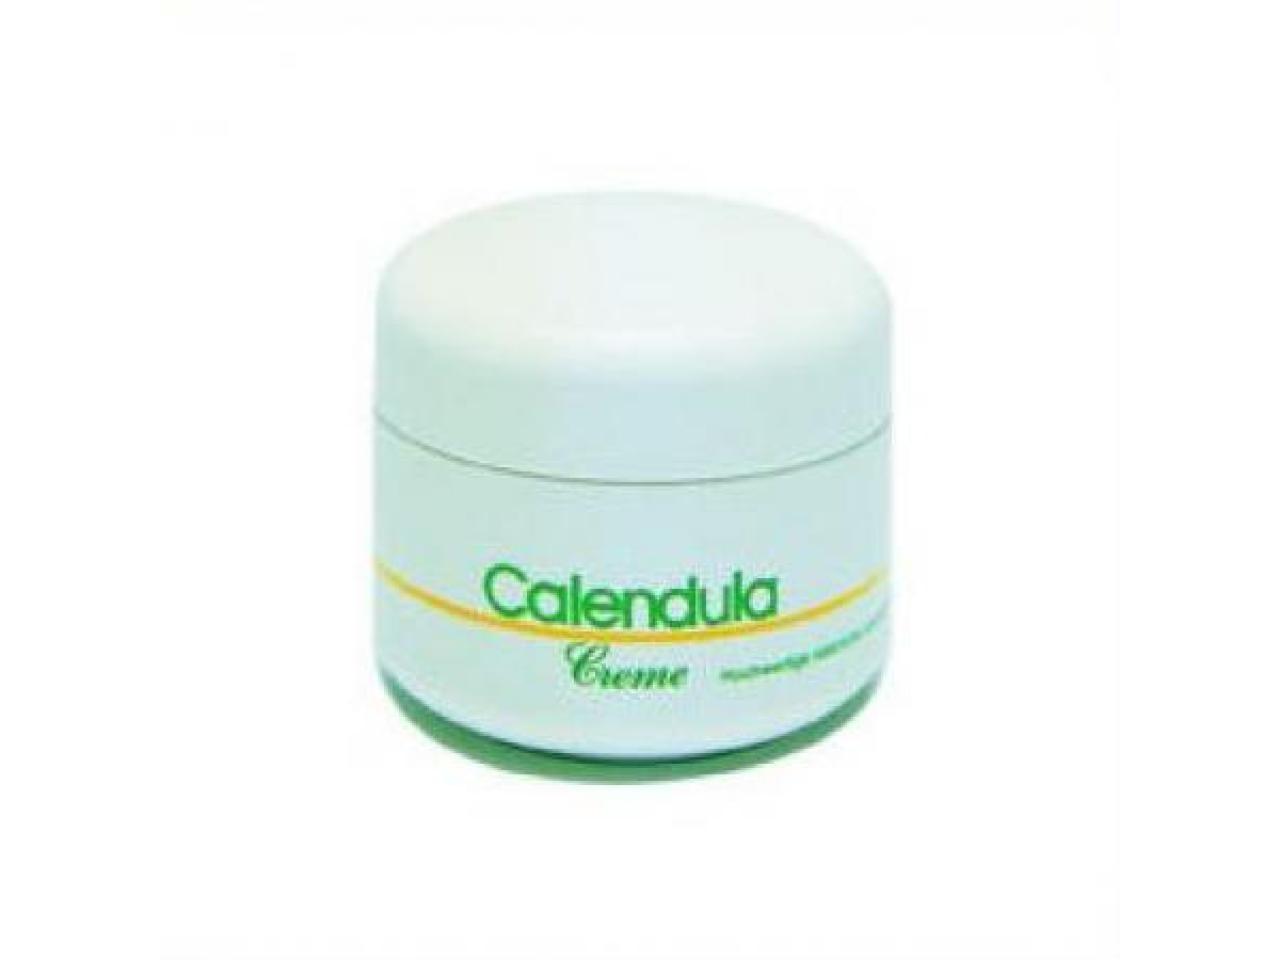 Conlei - Calendula-Creme 50 ml